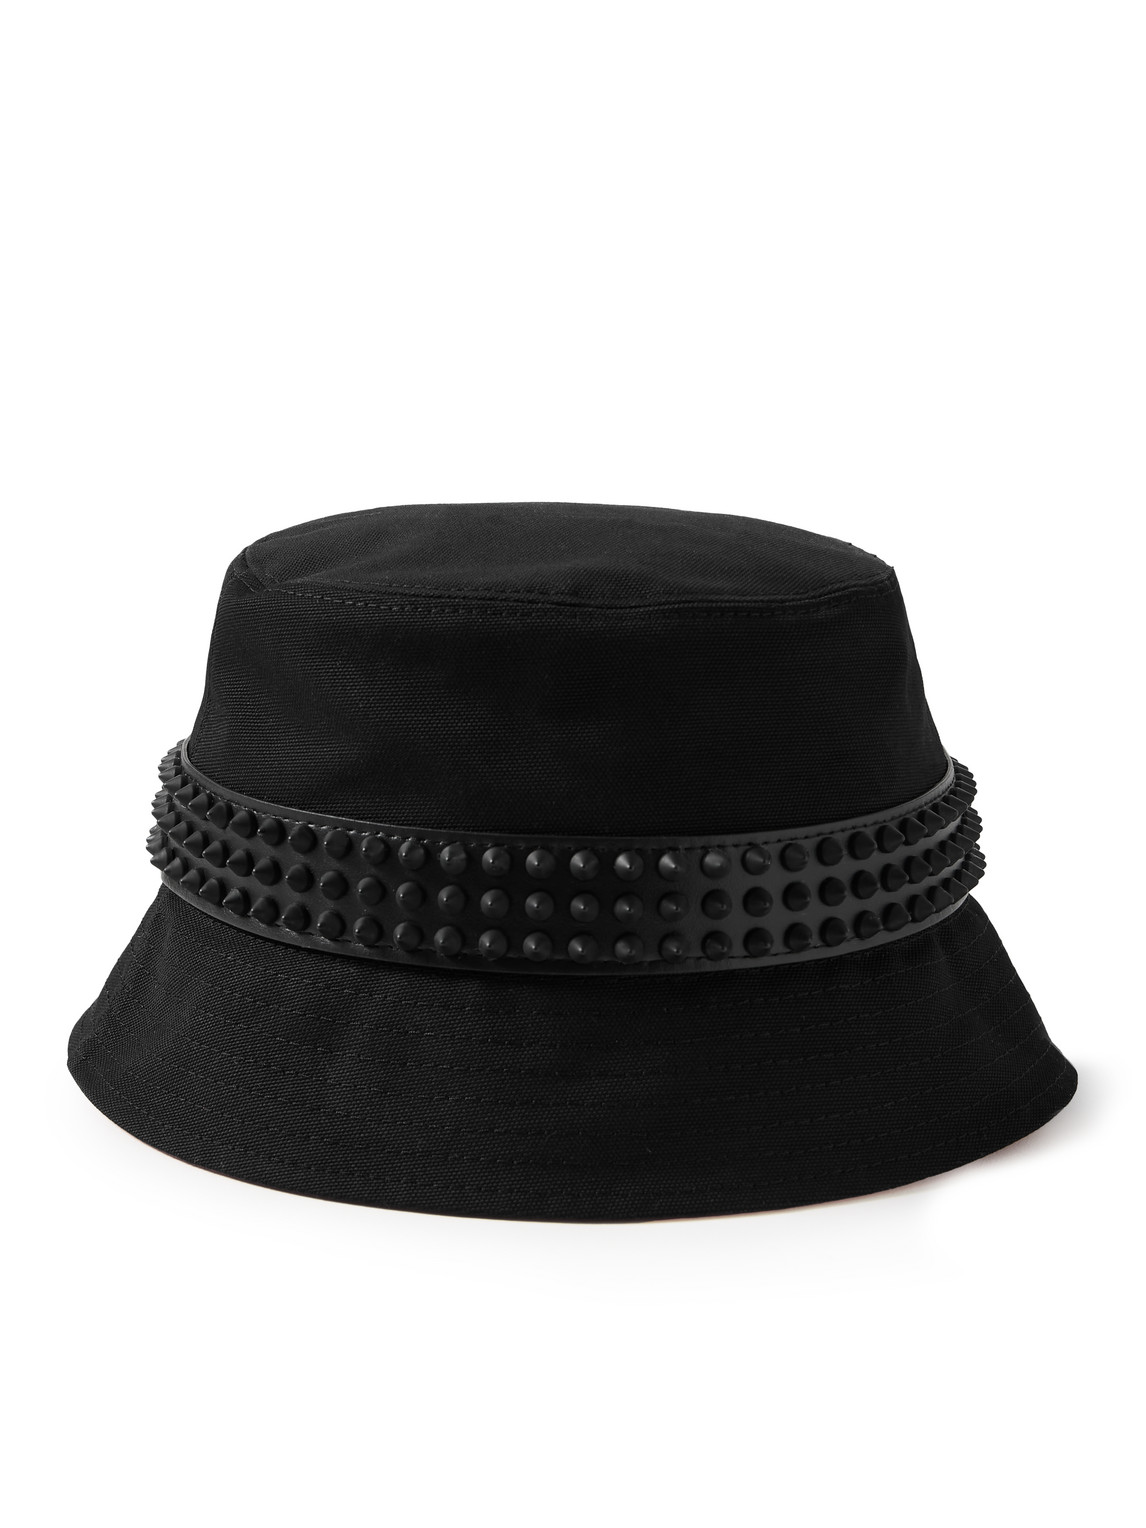 Christian Louboutin - Bobino Spikes Leather-Trimmed Cotton-Canvas Bucket Hat - Men - Black - S von Christian Louboutin